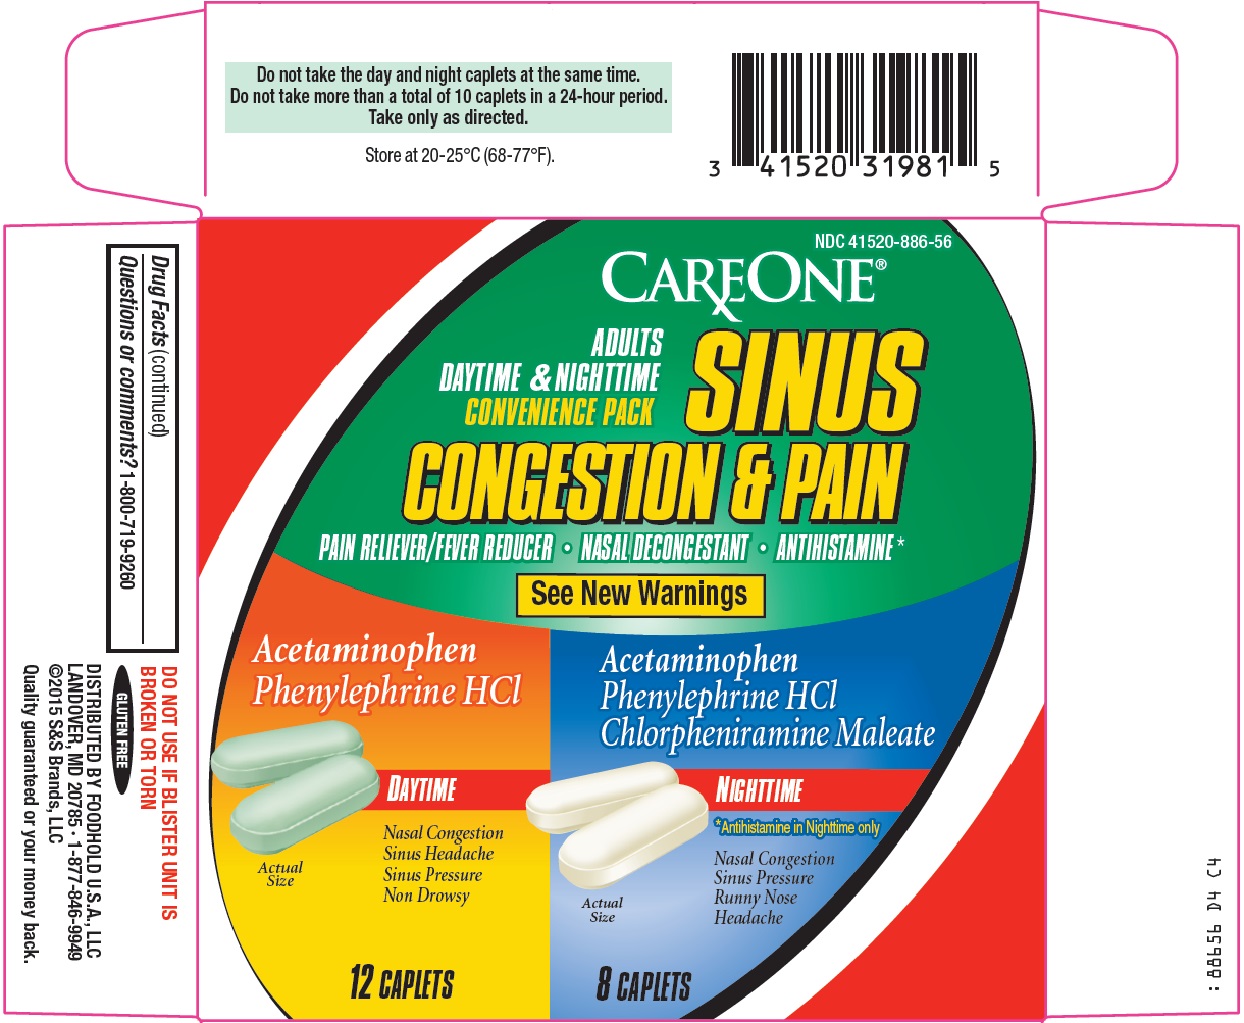 CareOne Sinus Congestion & Pain image 1